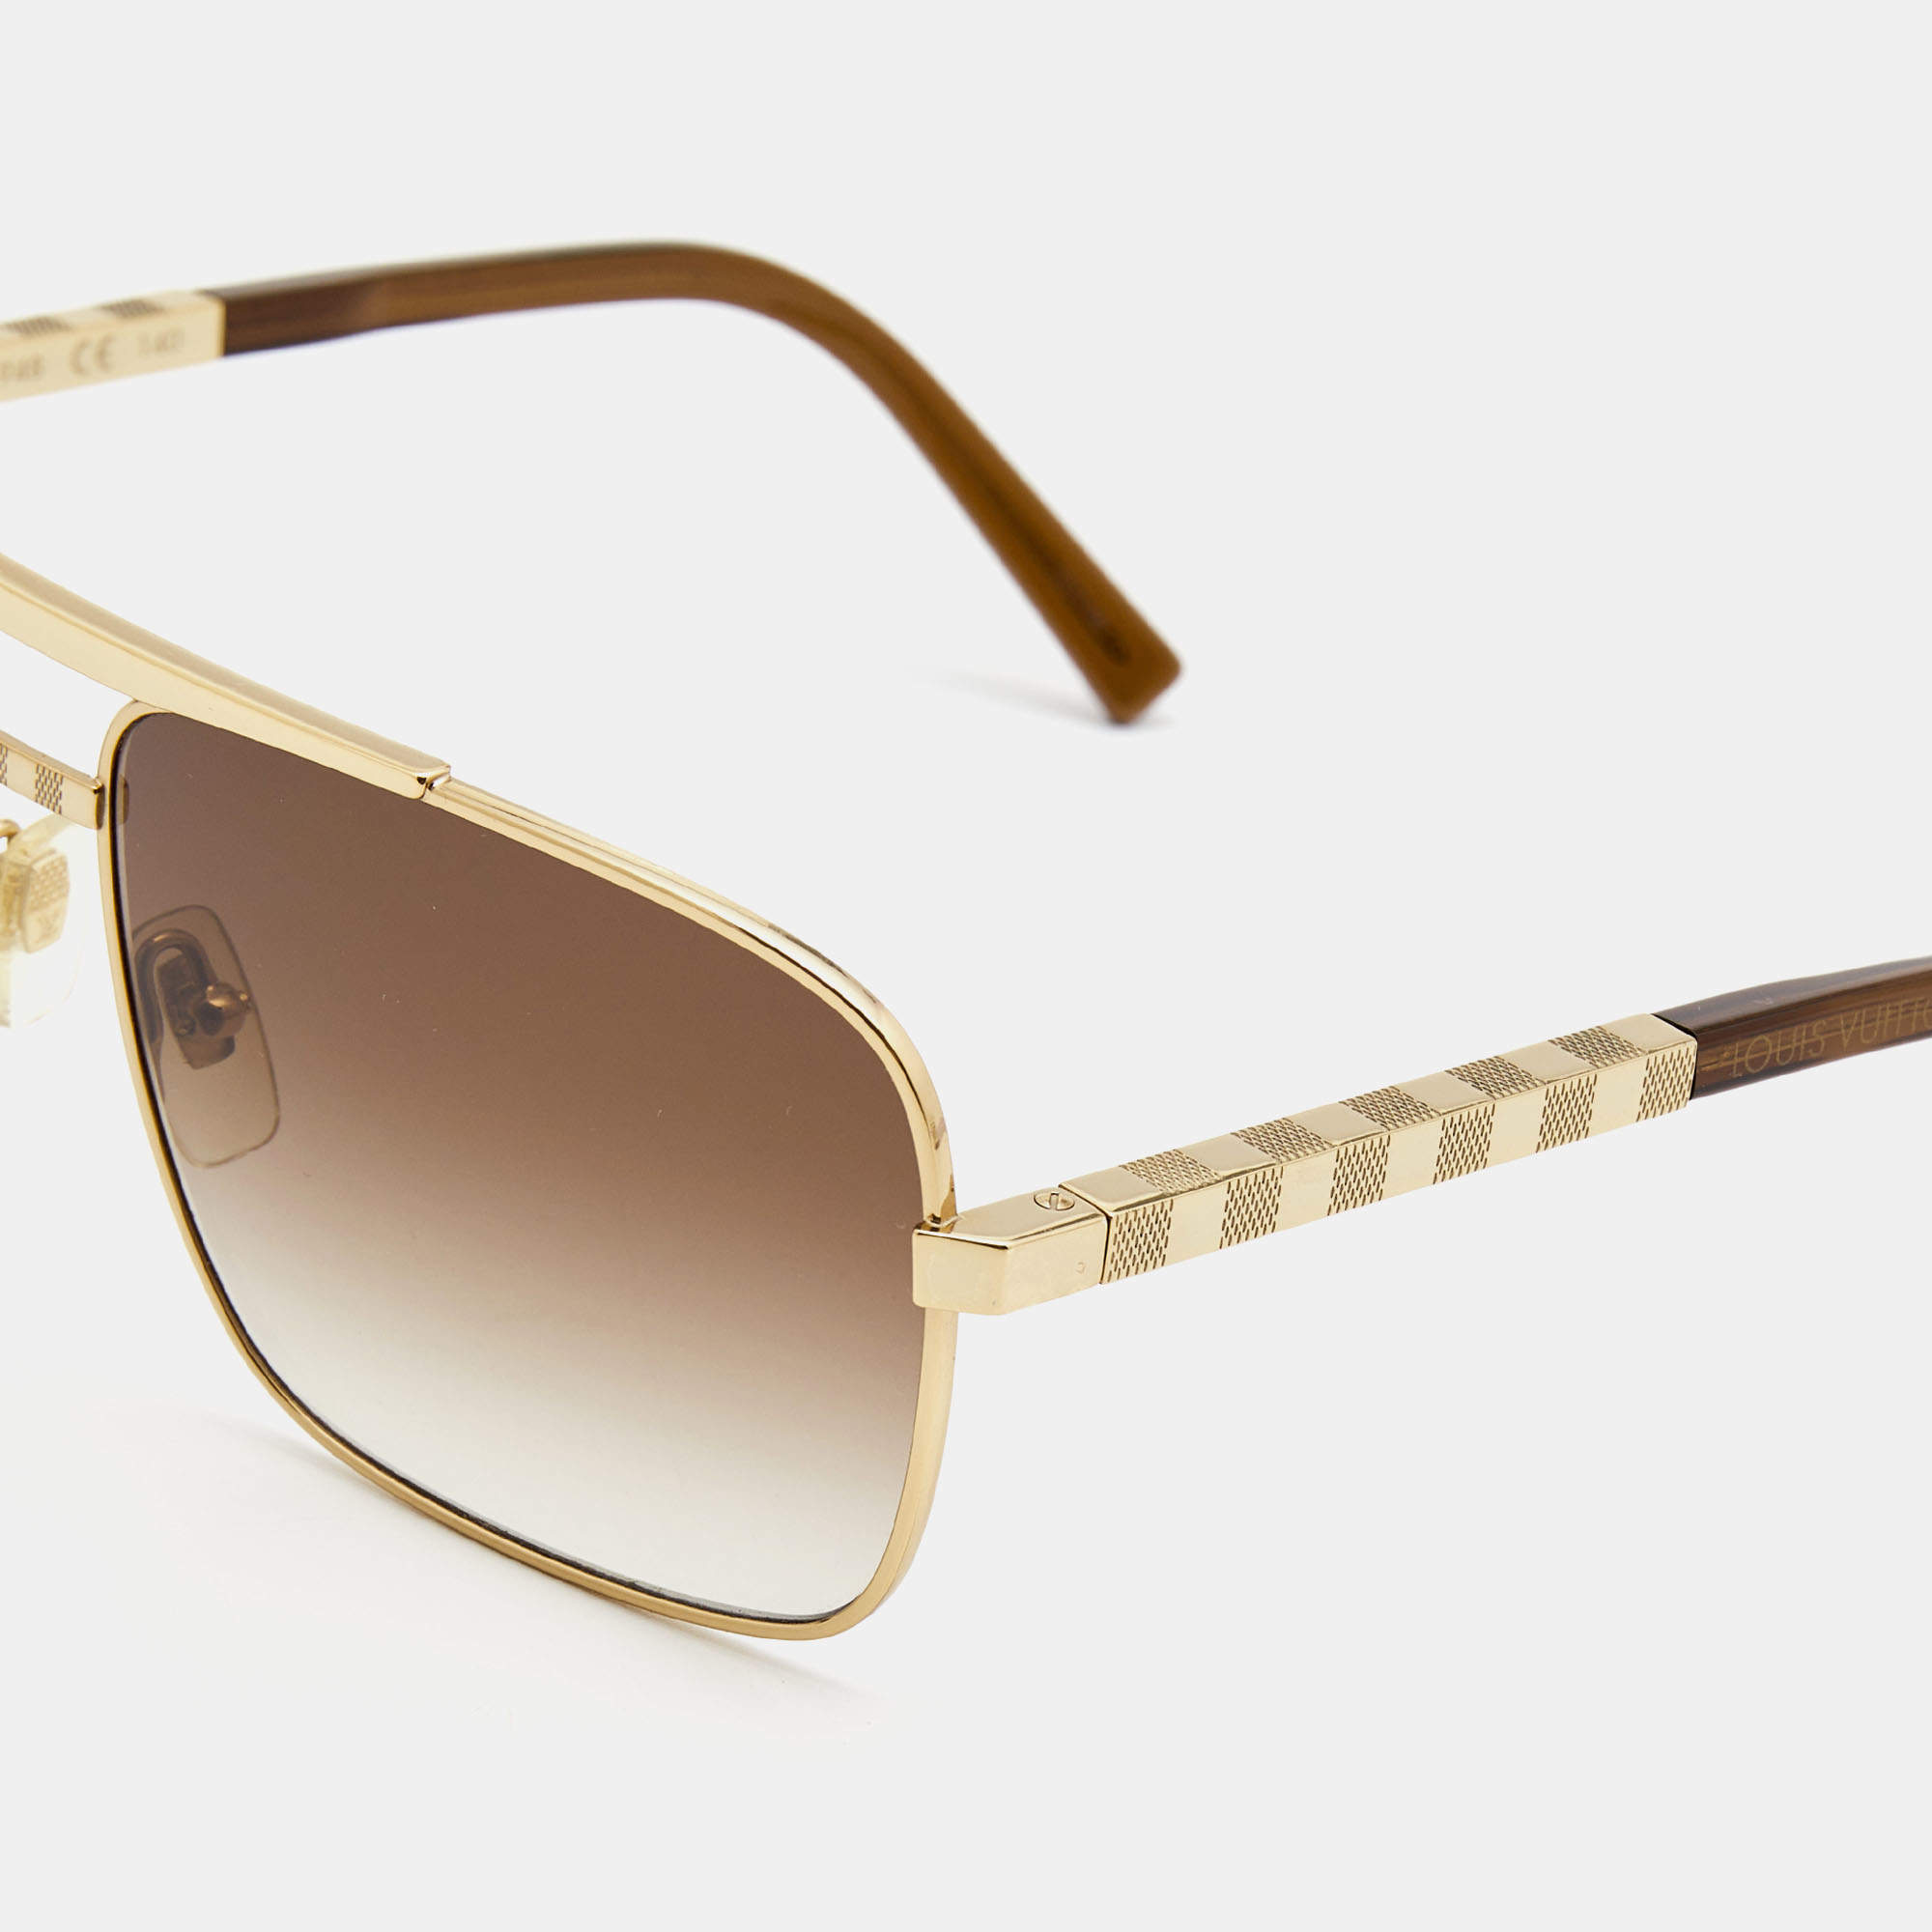 Louis Vuitton ATTITUDE SUNGLASSES men sunglasses